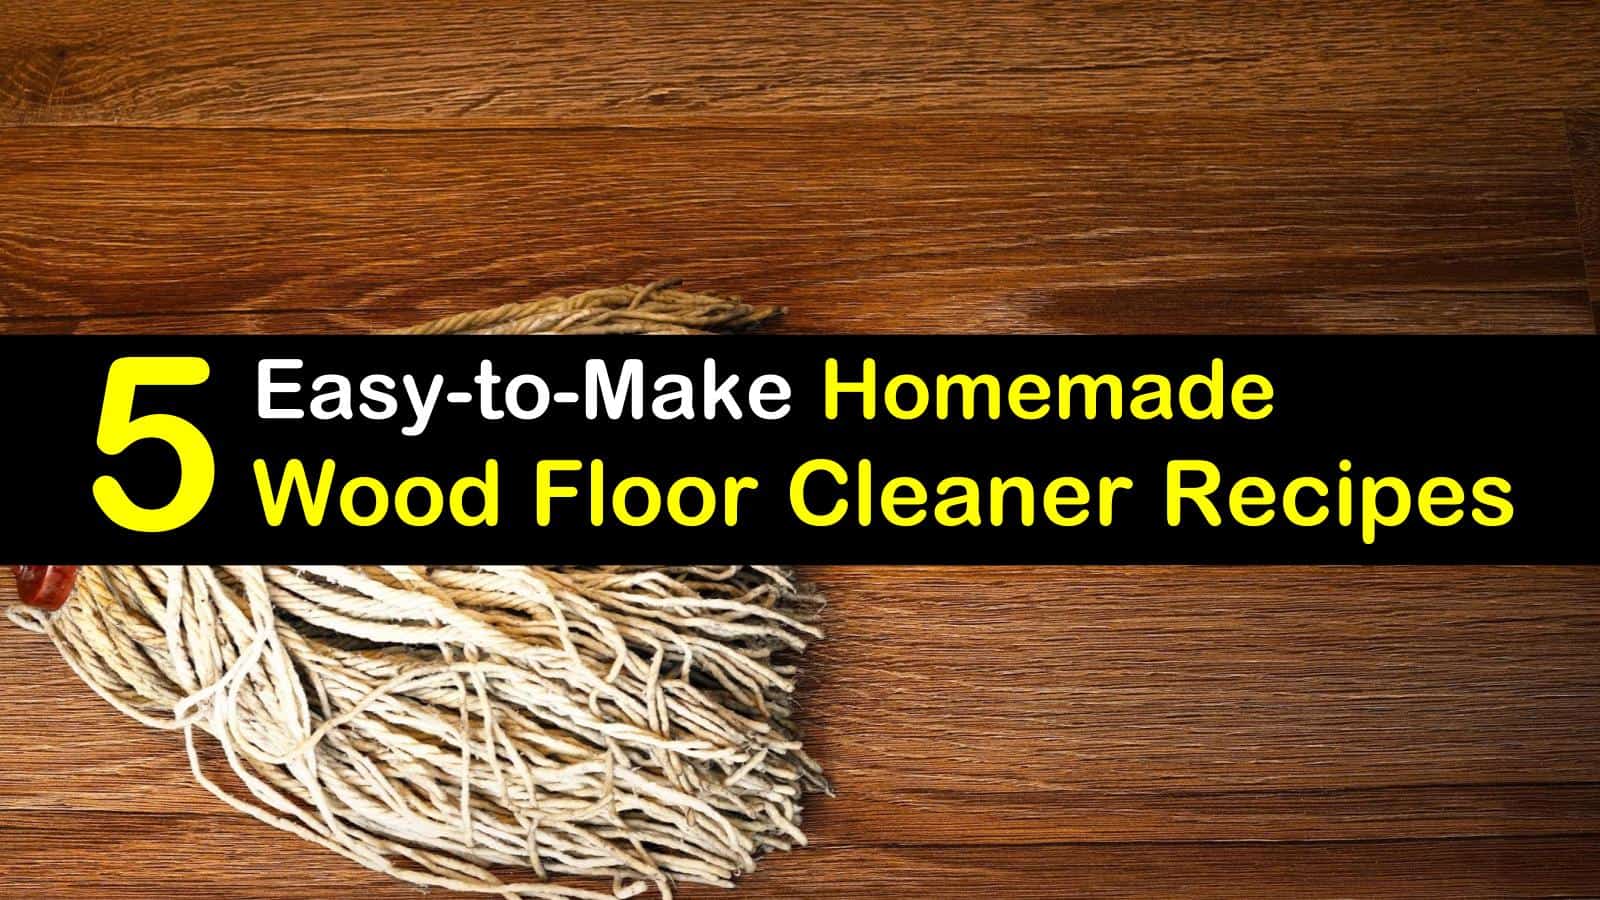 Homemade Wood Floor Cleaner Recipes, How To Clean Hardwood Floors With Vinegar